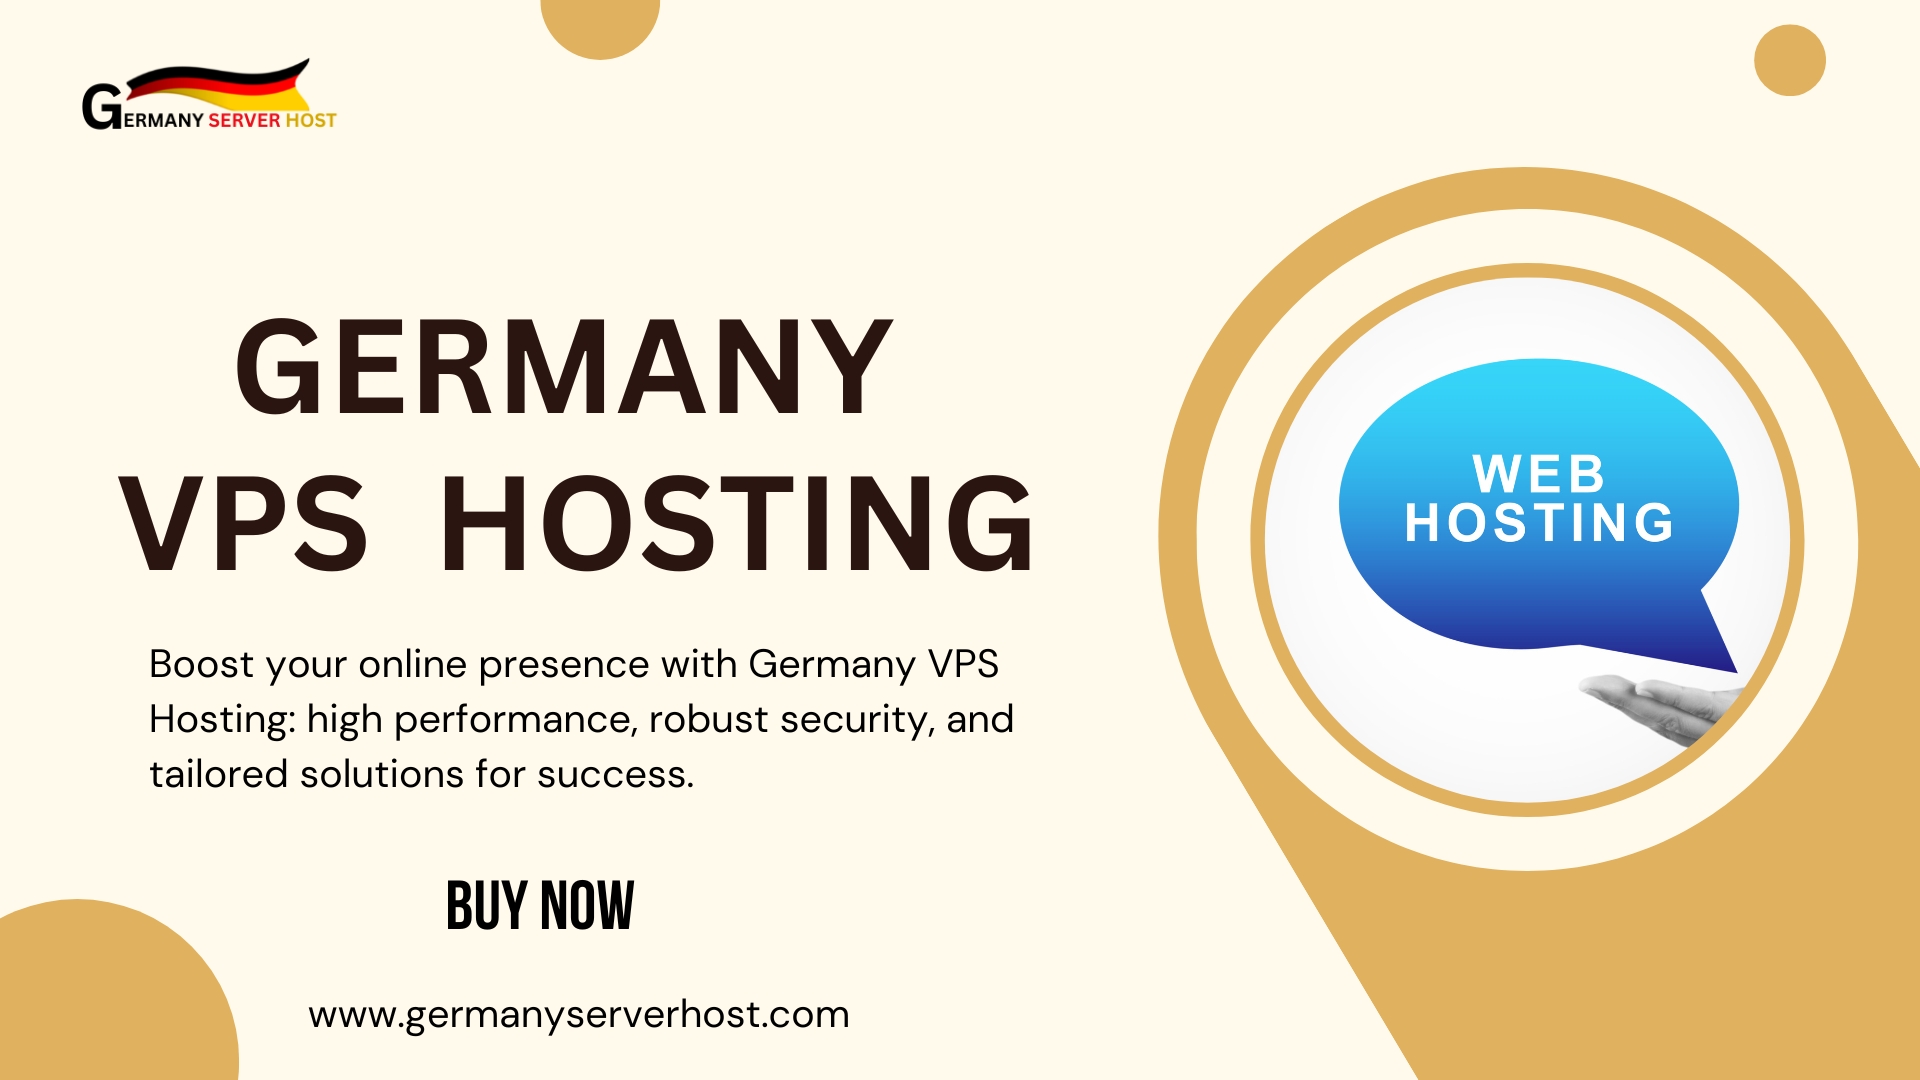 Germany VPS Server